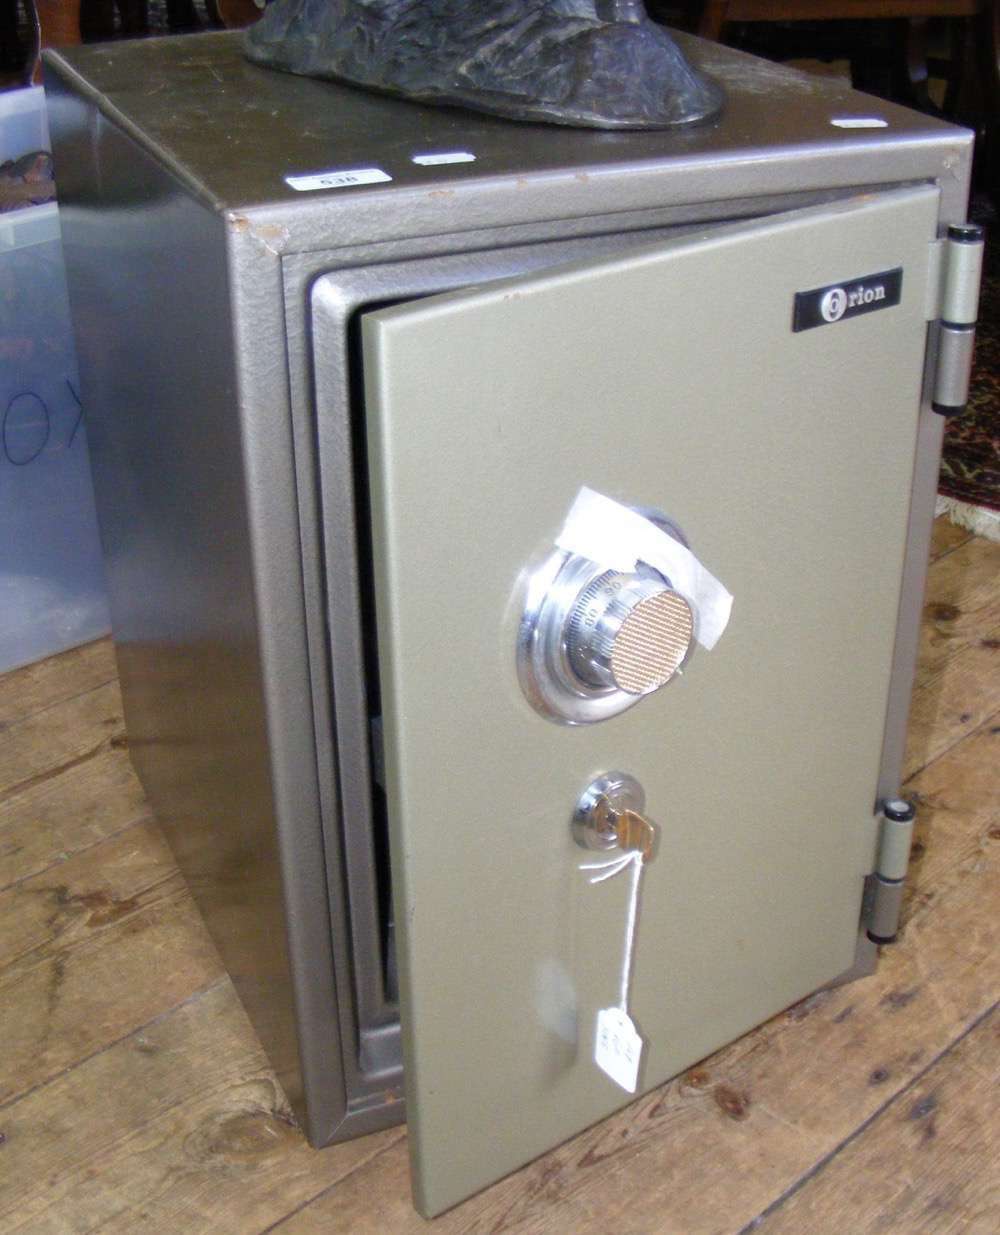 A 50cm high lockable safe